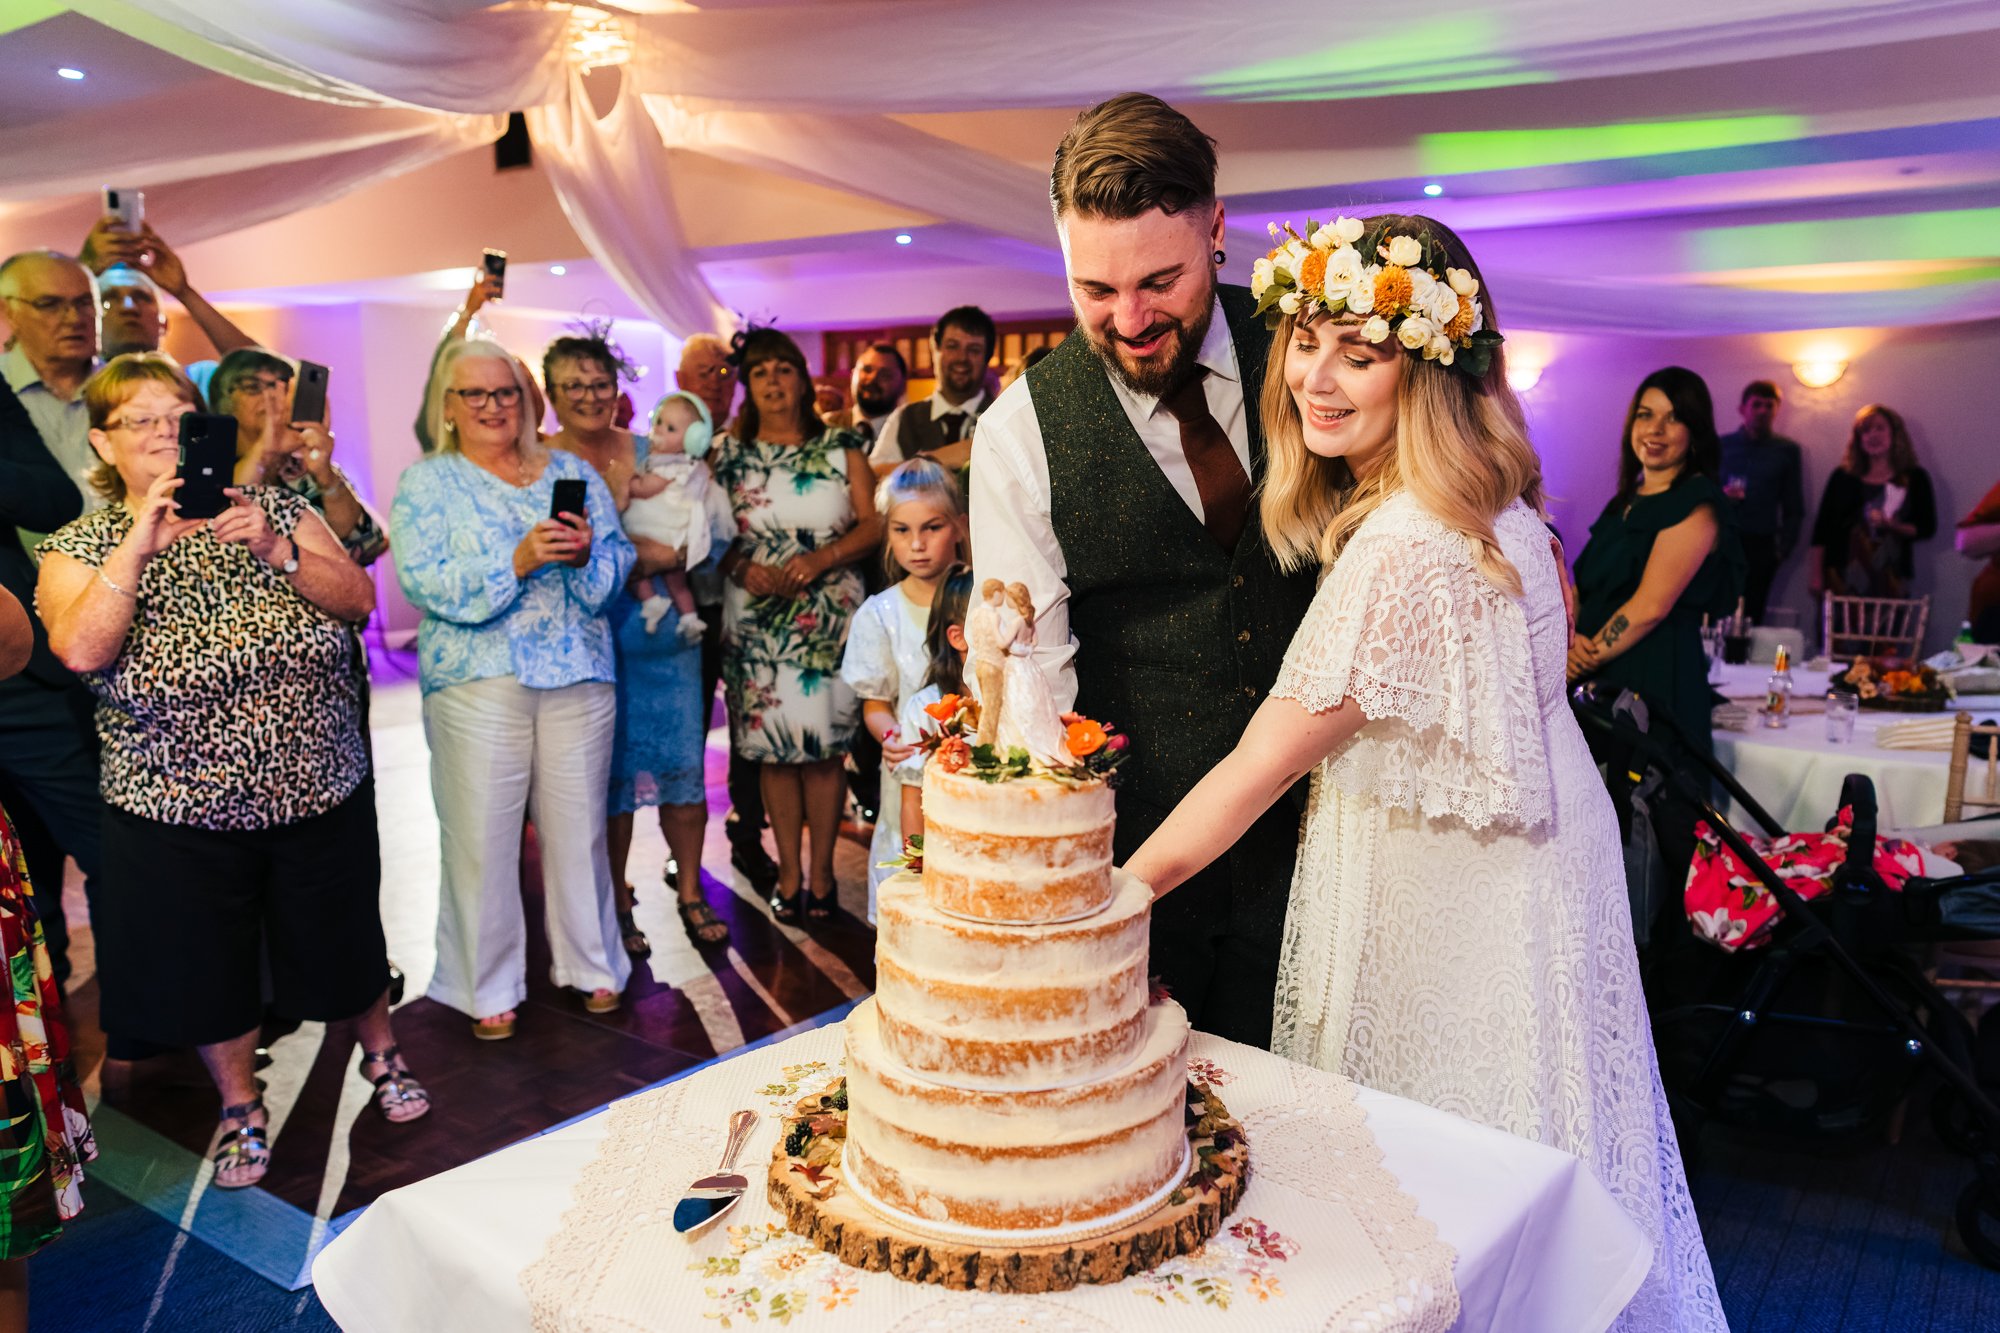 MAKENEY HALL WEDDING PHOTOGRAPHY - bride and groom cutting the wedding cake at Makeney Hall